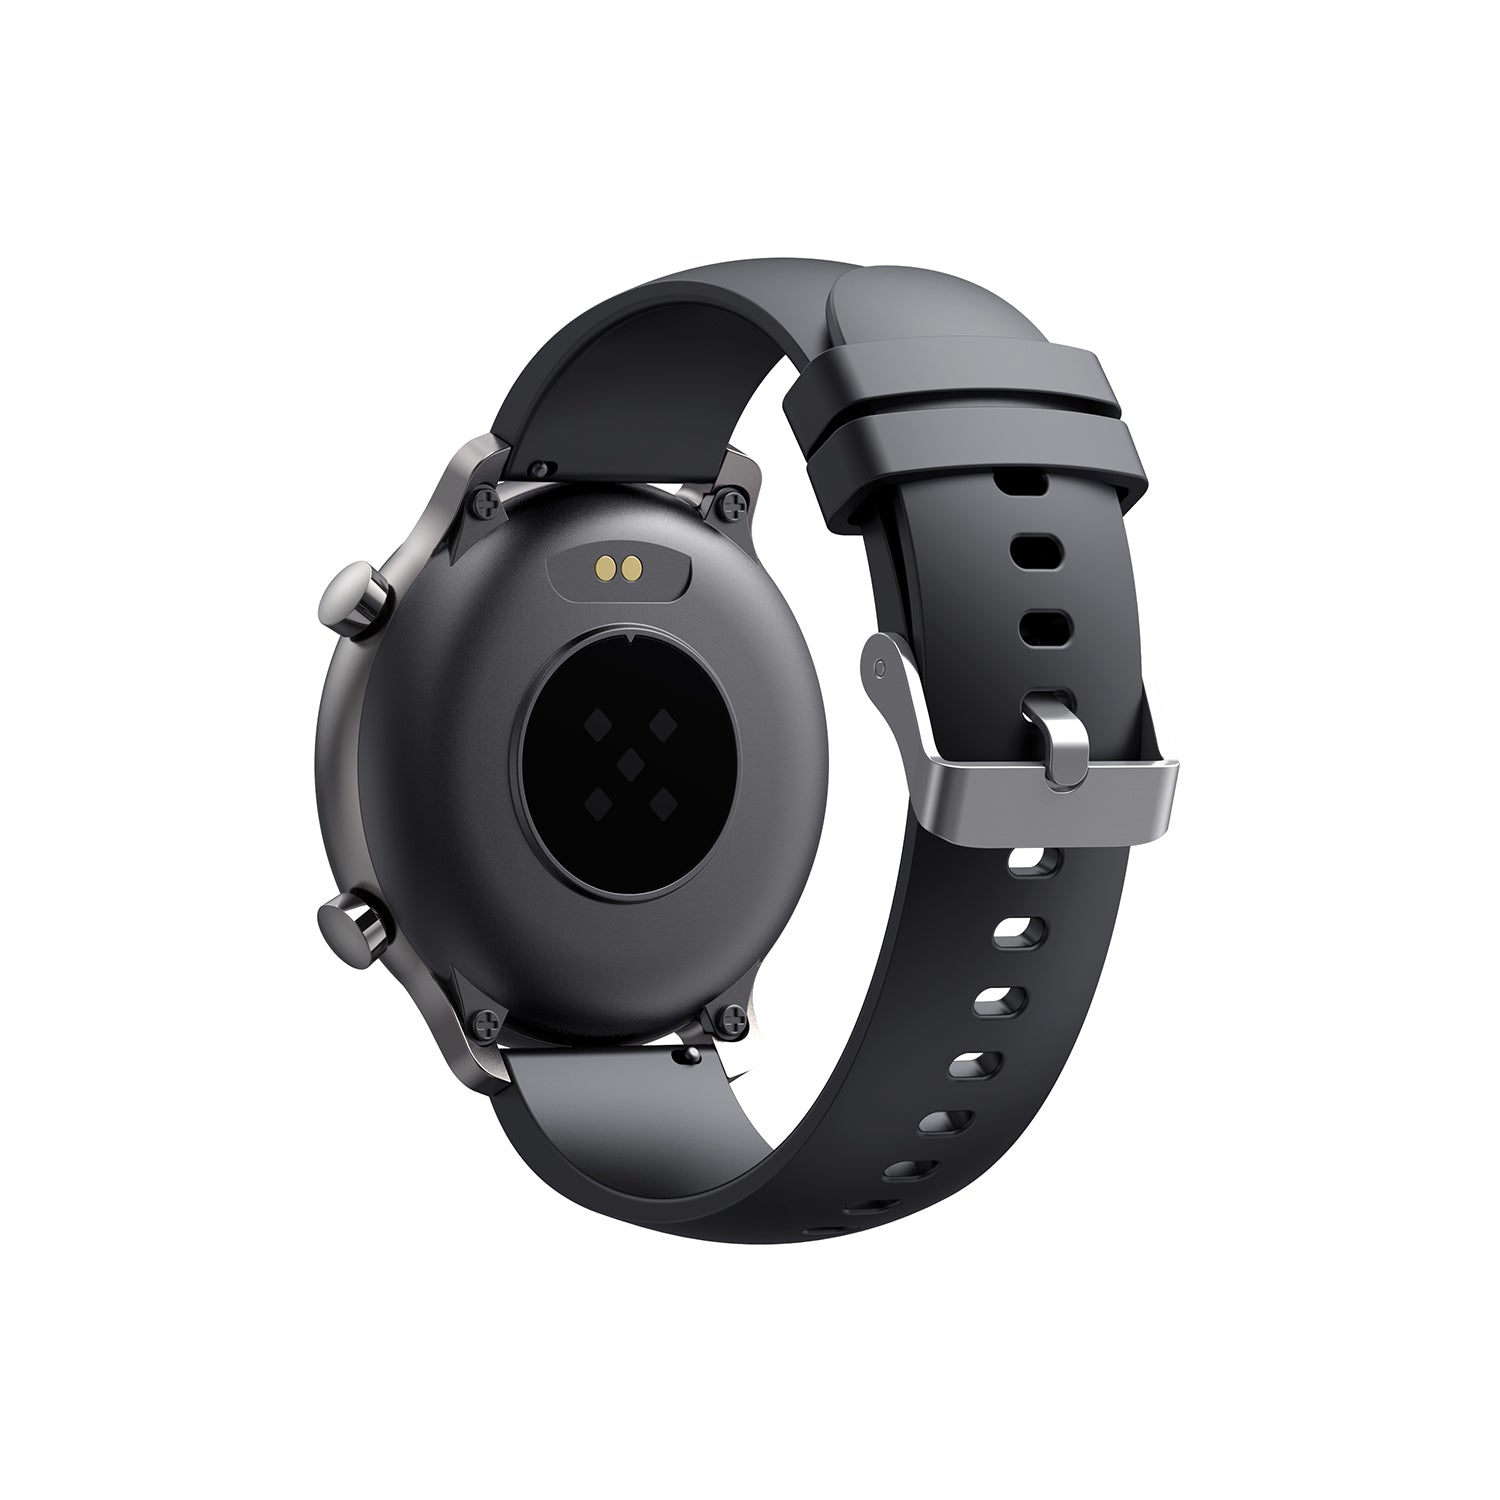 HAVIT M9014 Smart Watch with 11 Sports Modes, IP68 Waterproof